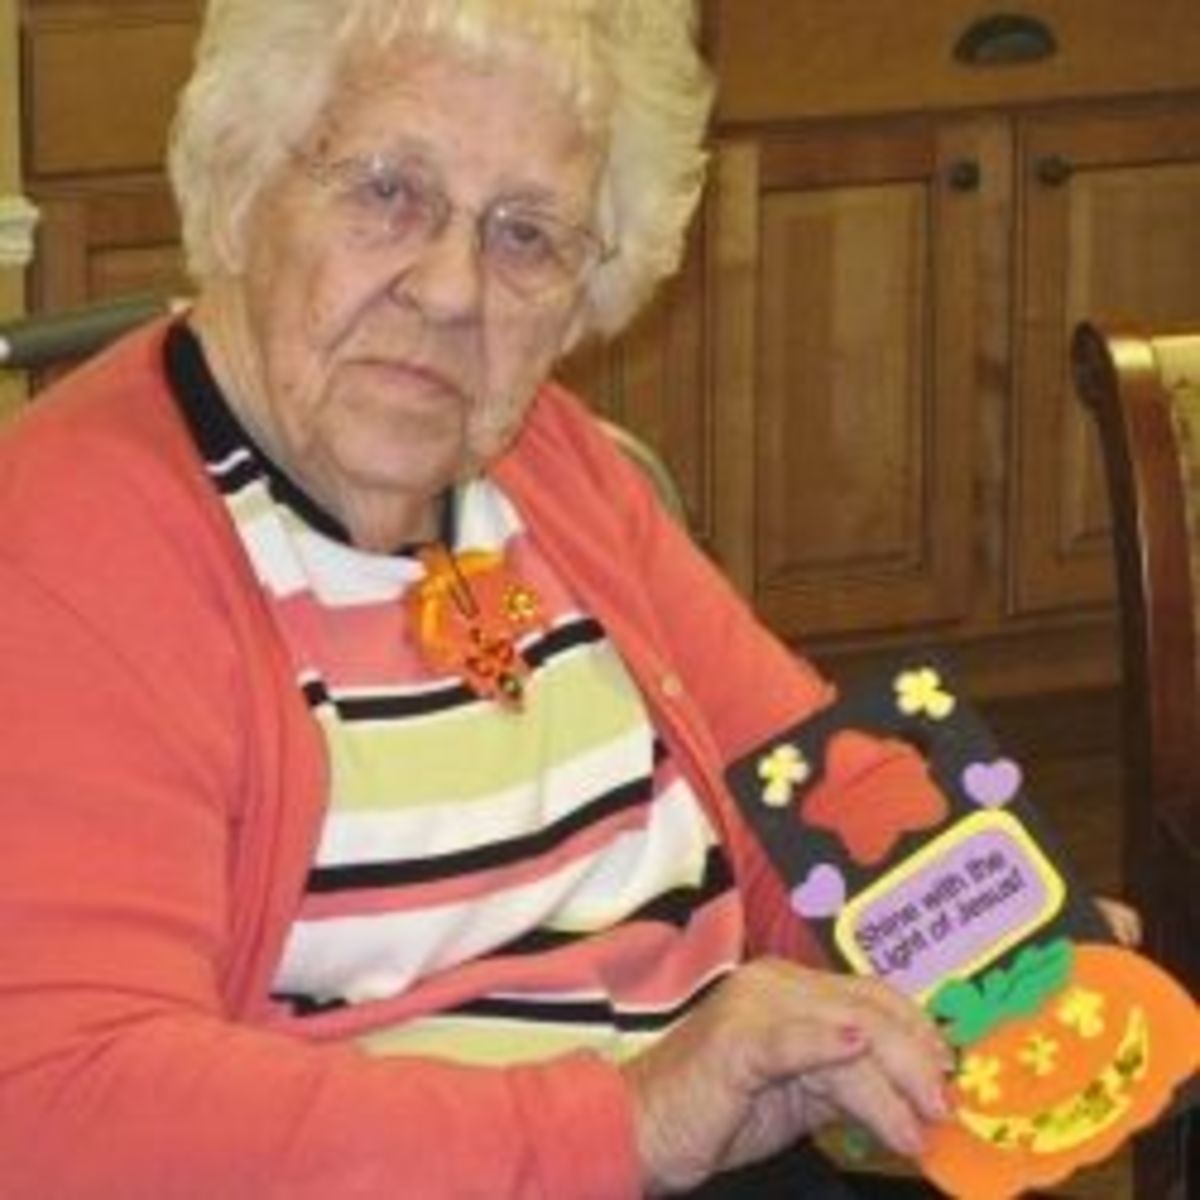 Halloween crafts for the elderly